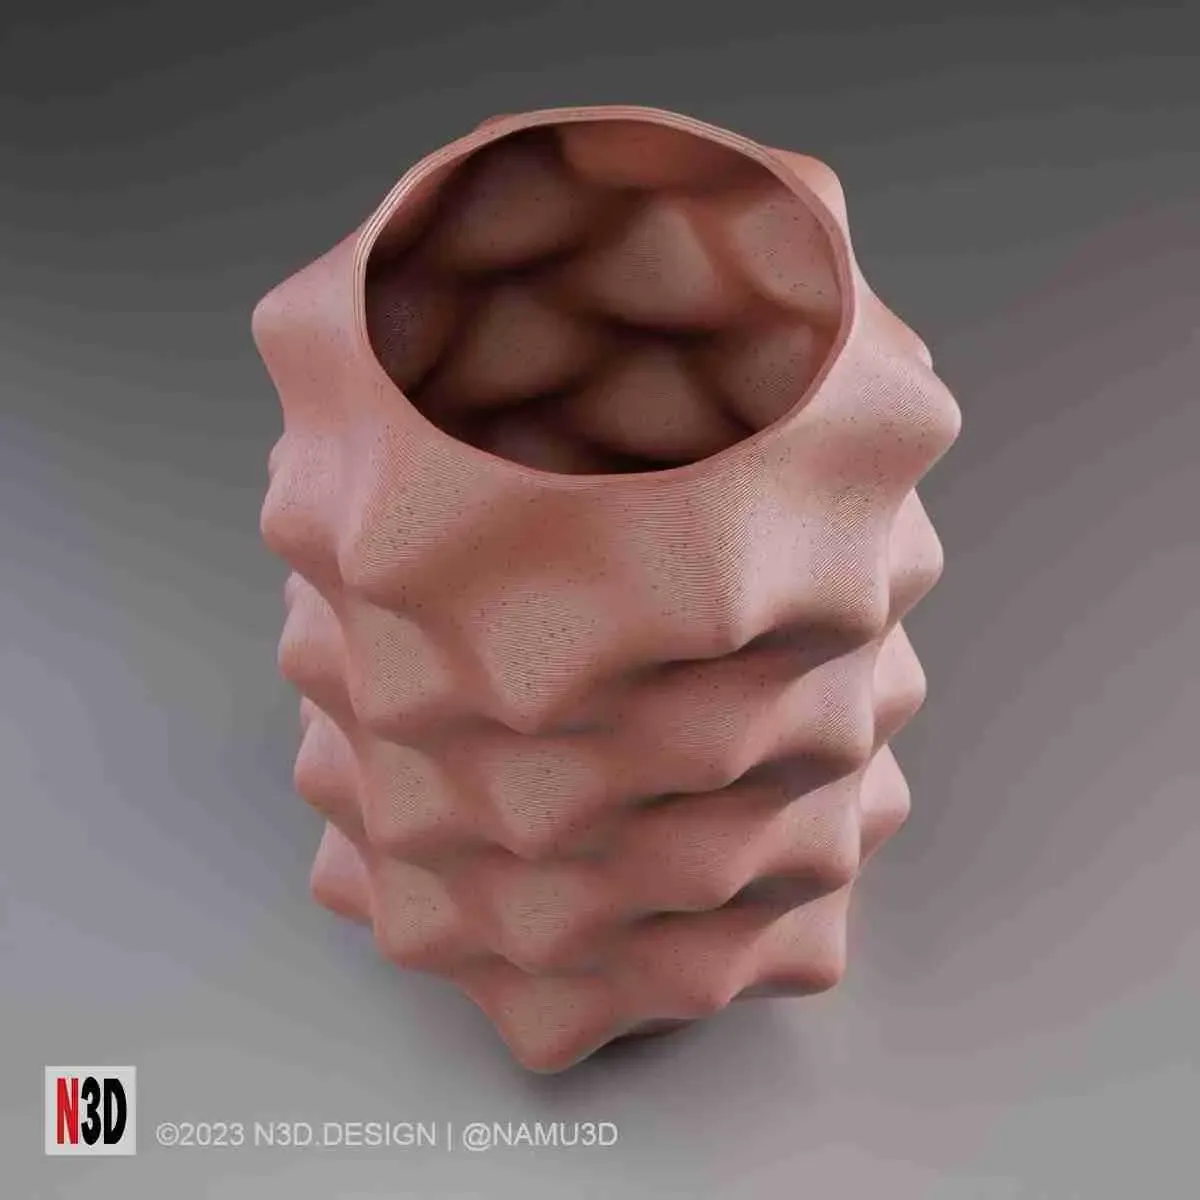 Vase 0036 - Bumpy vase